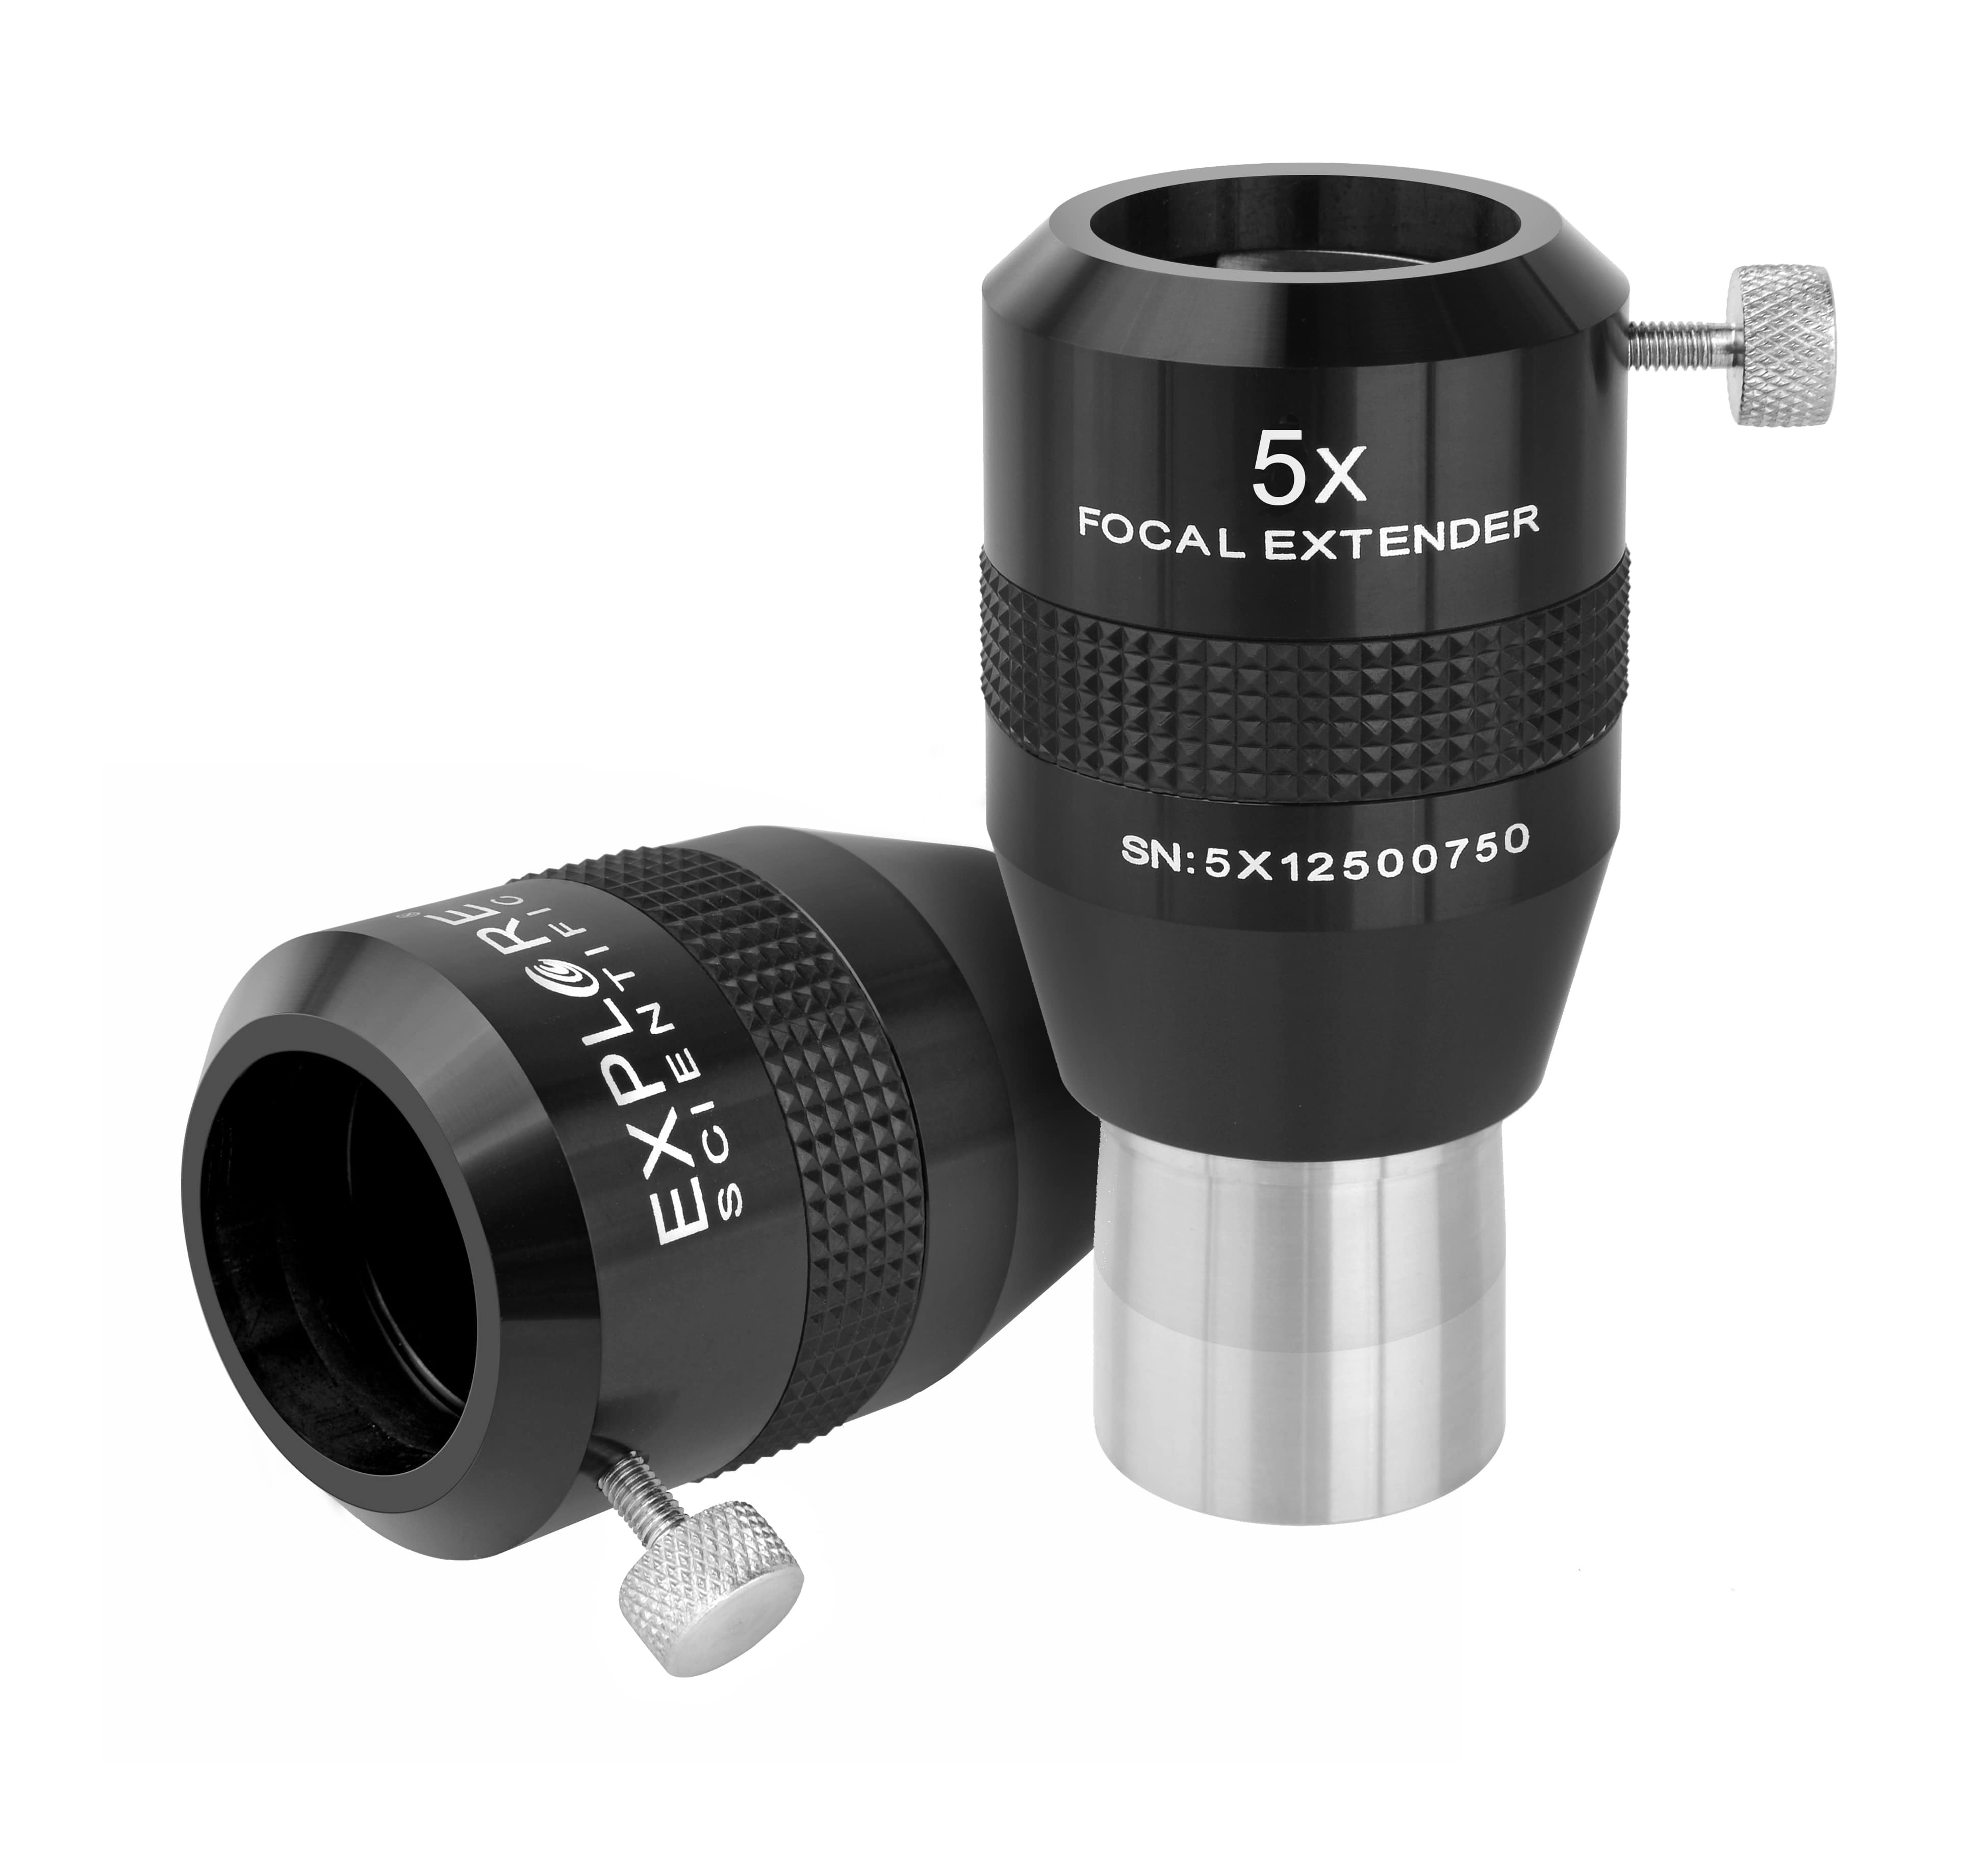   Four-lens Premium-Teleextender with extension factor 5x [EN]  